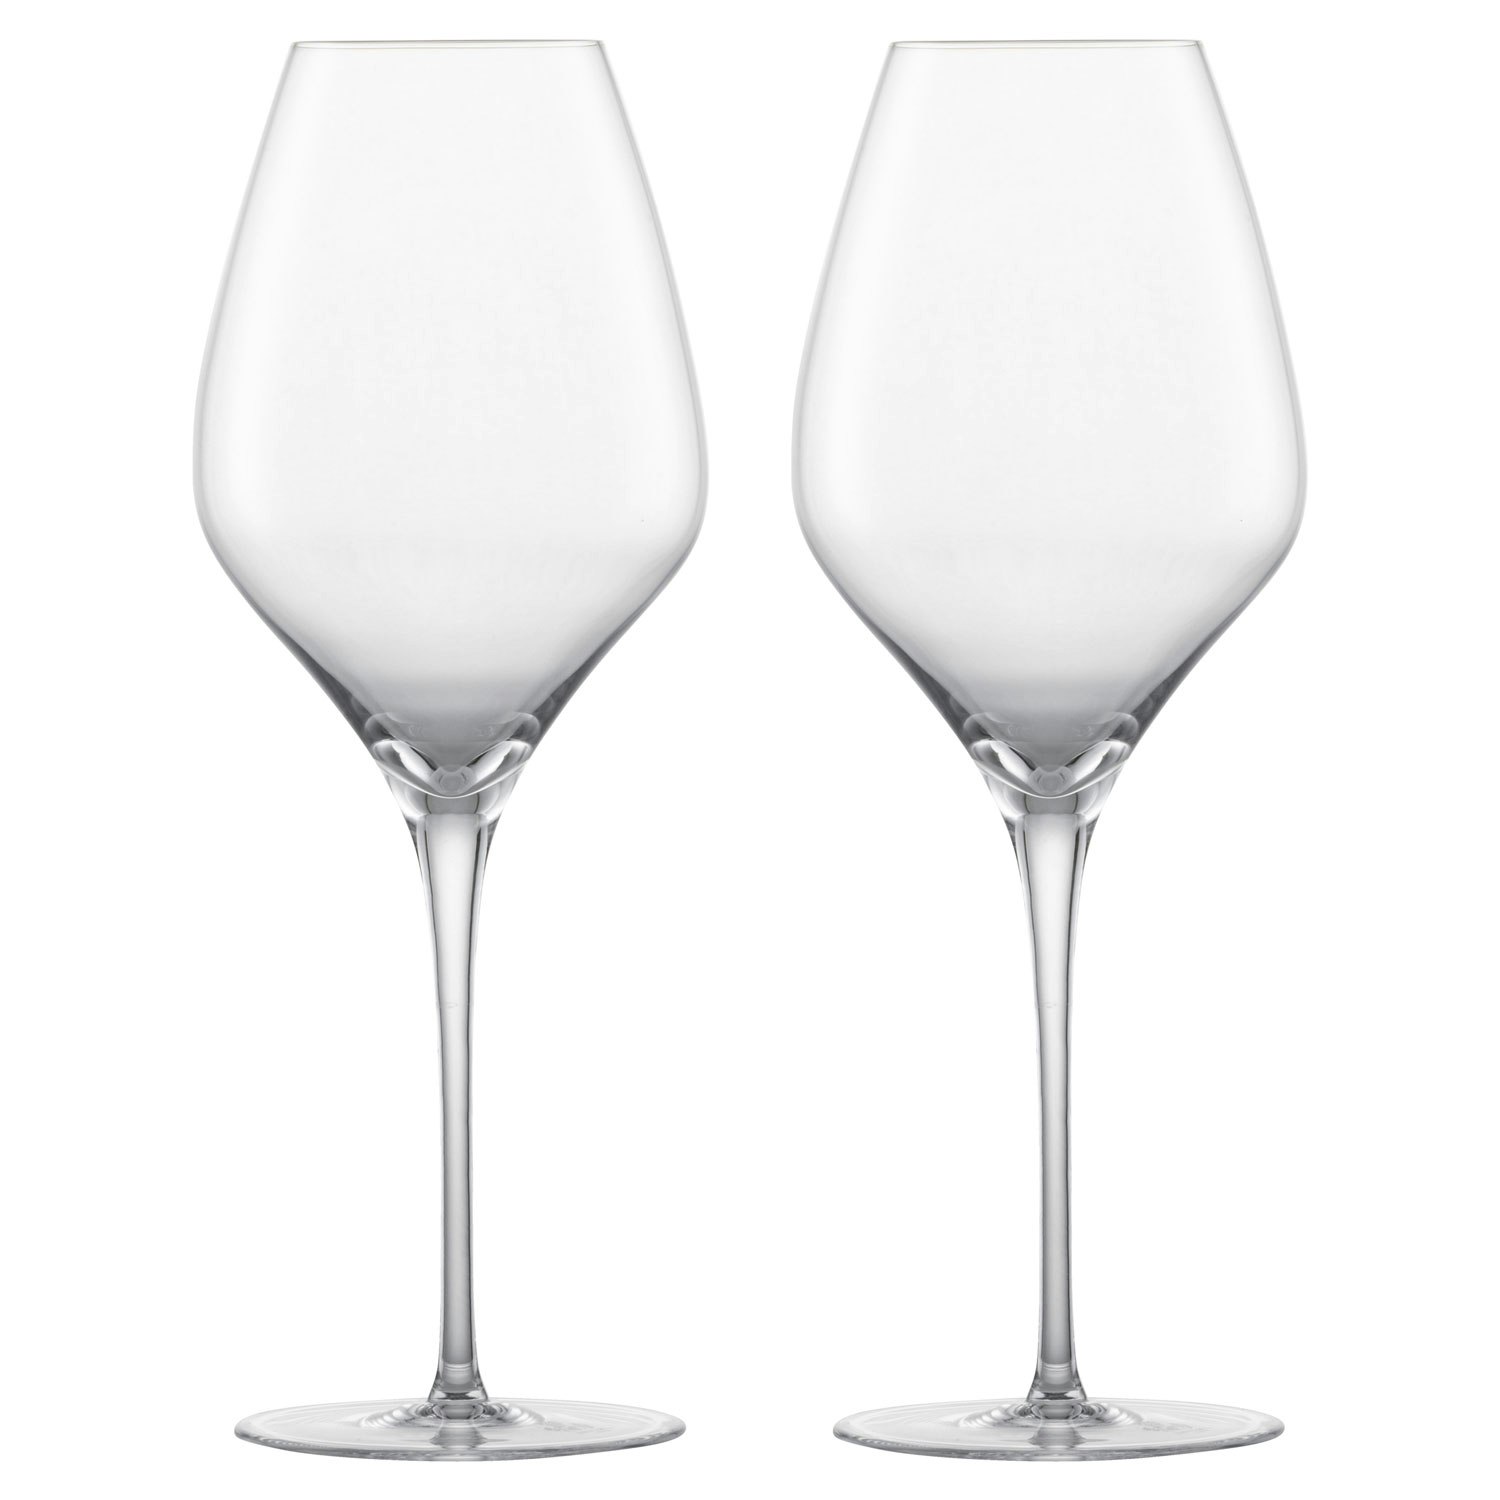 Vivid Senses Drinking Glass 50 cl, 4-pack - Zwiesel @ RoyalDesign